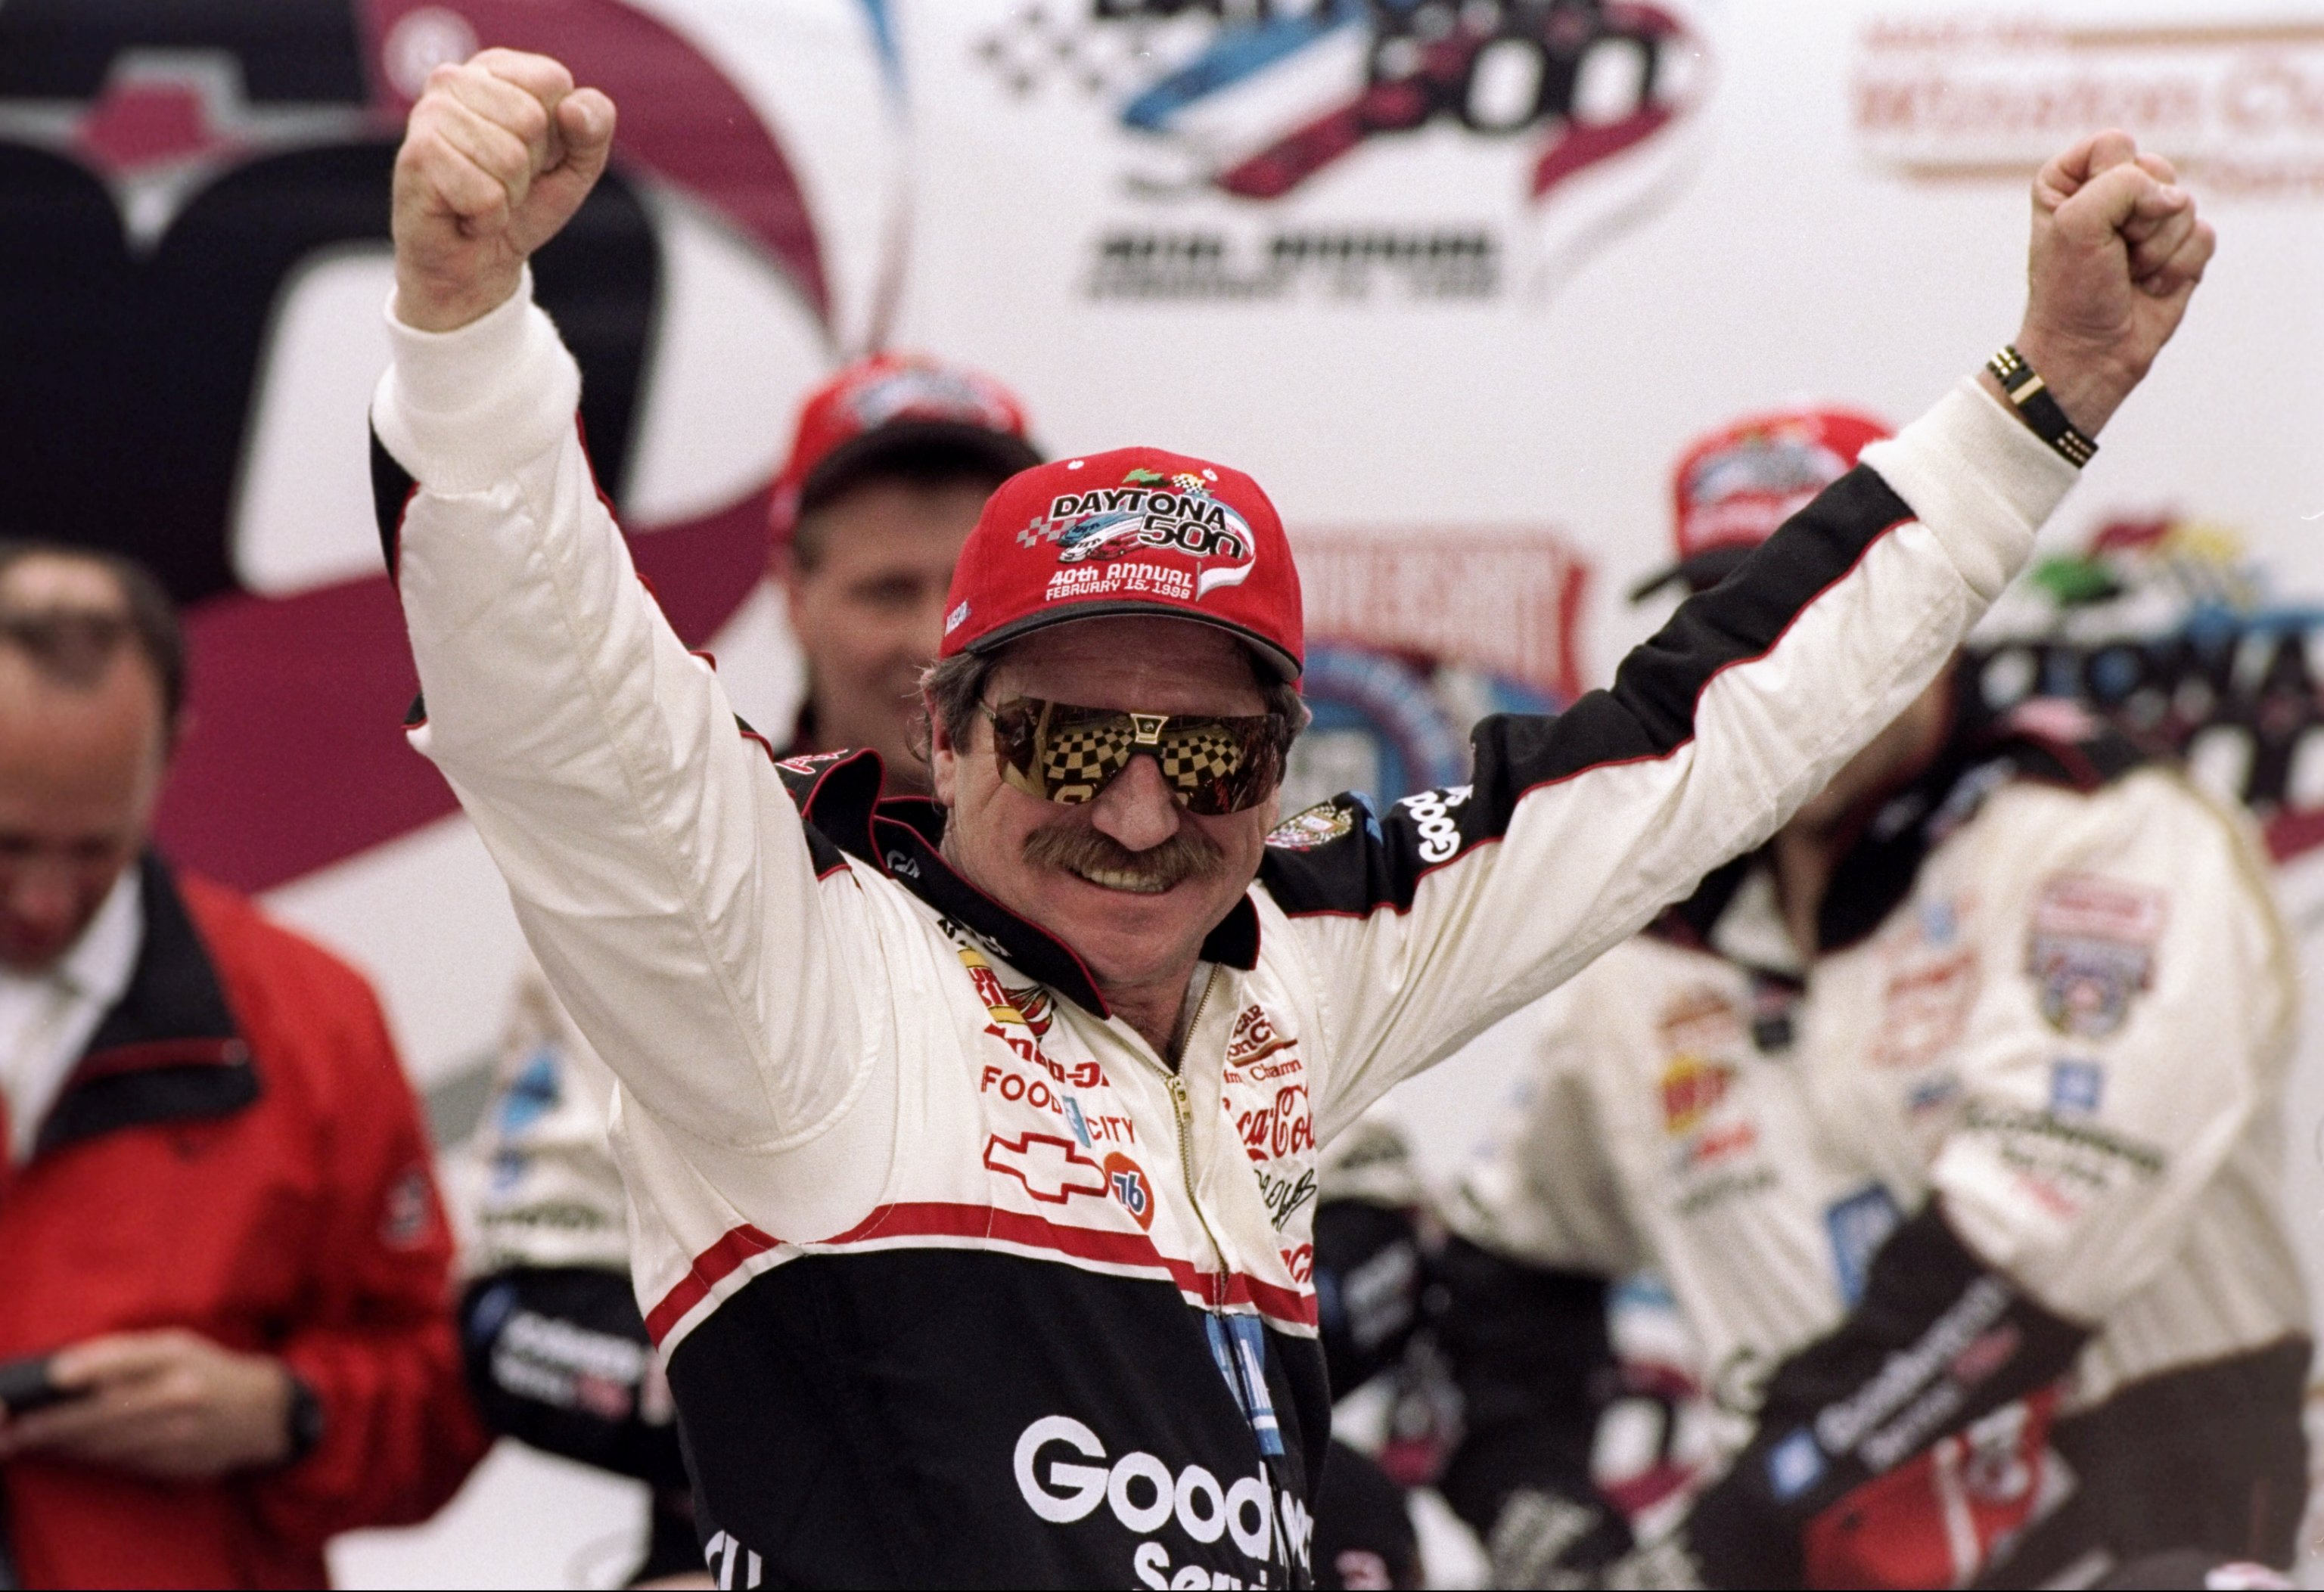 15 Feb 1998: Dale Earnhardt celebrates after winning the Daytona 500 at Daytona International Speedway in Daytona Beach, Florida.